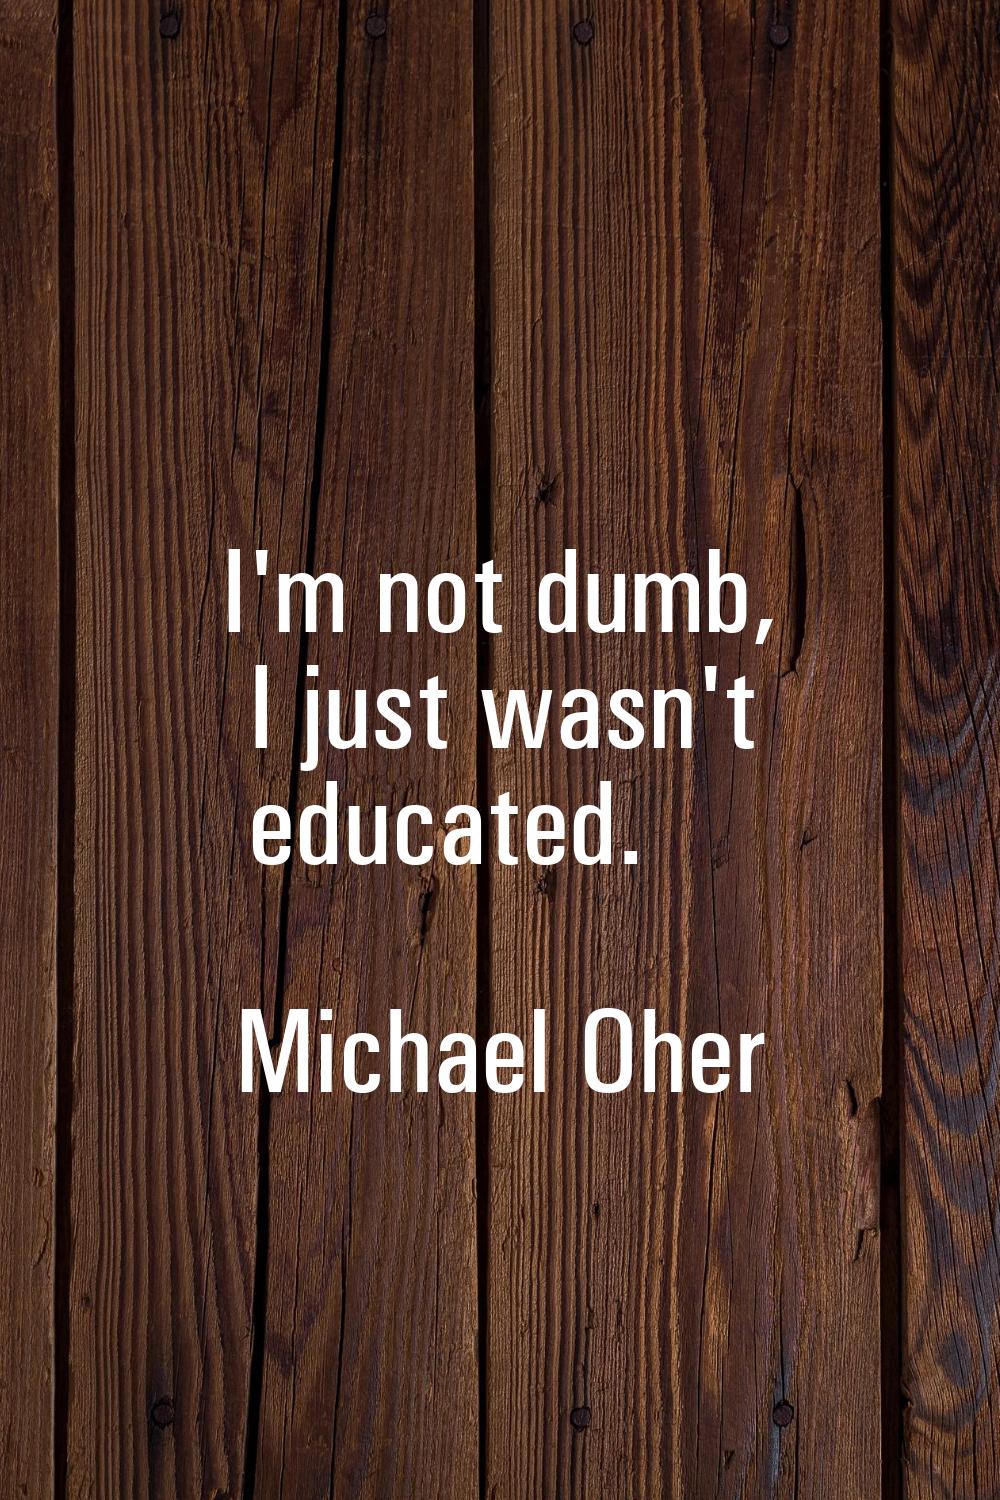 I'm not dumb, I just wasn't educated.